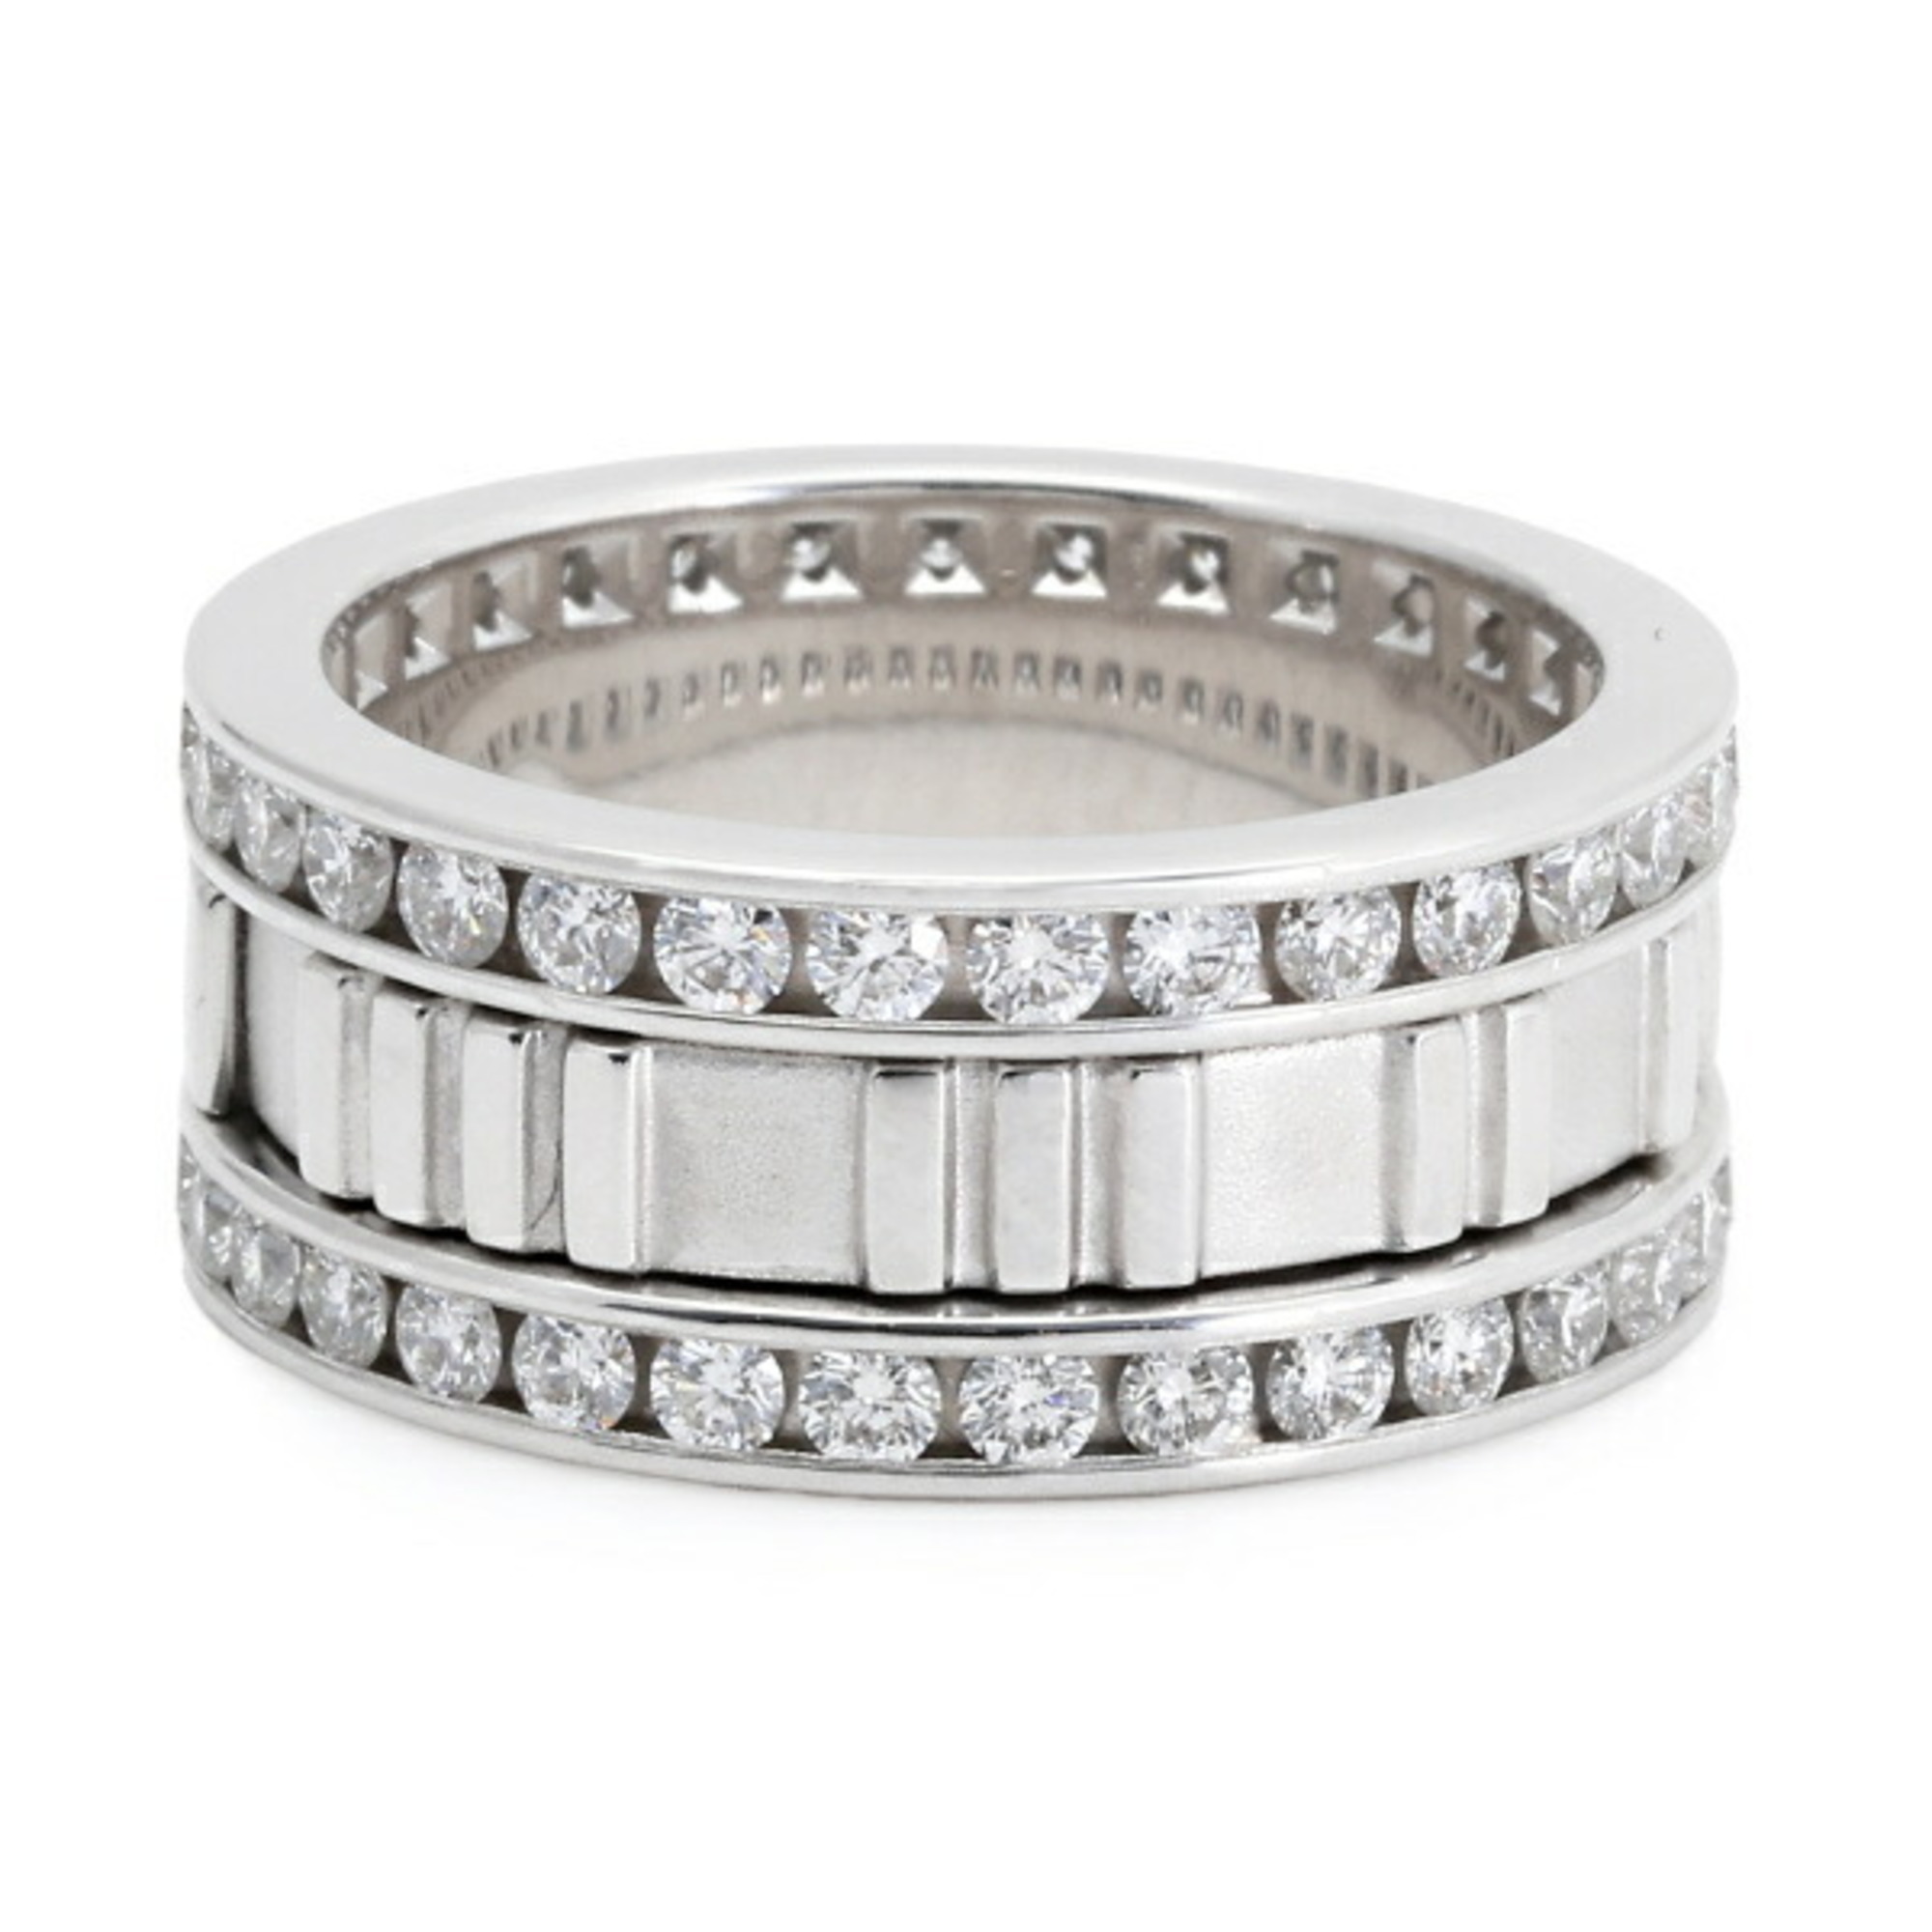 Tiffany Atlas K18WG white gold ring